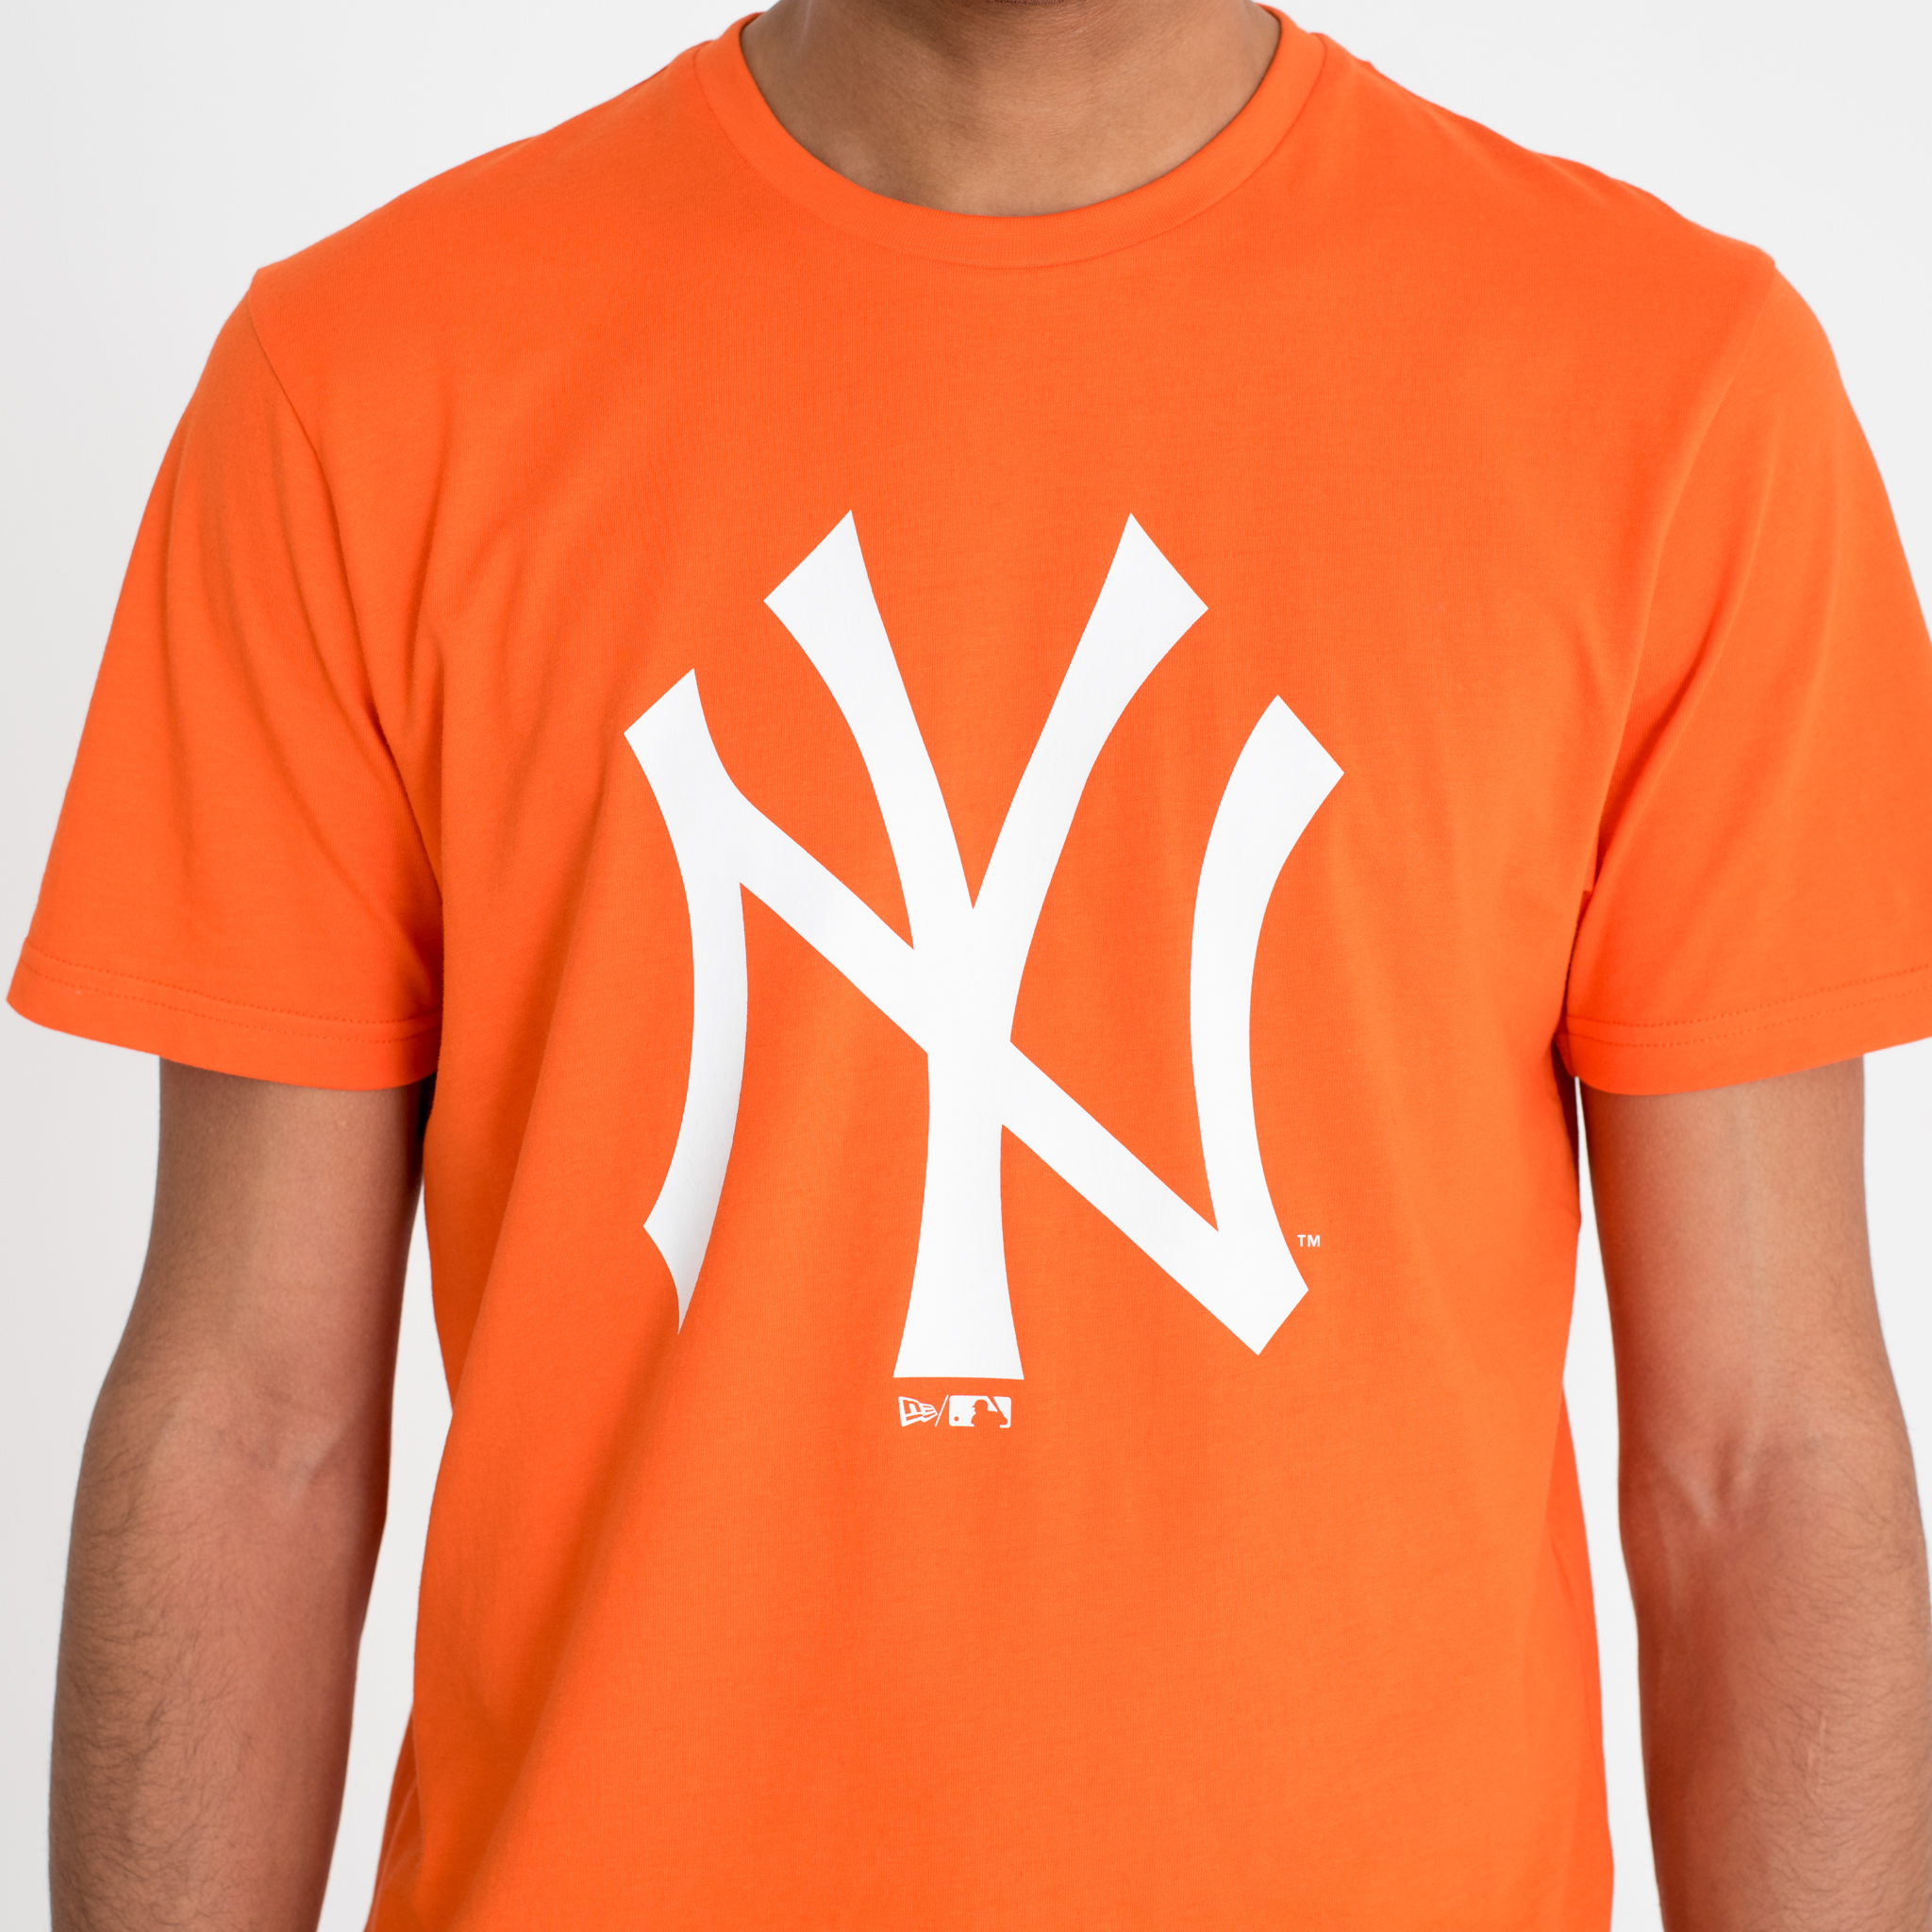 T-shirt orange des Yankees de New York